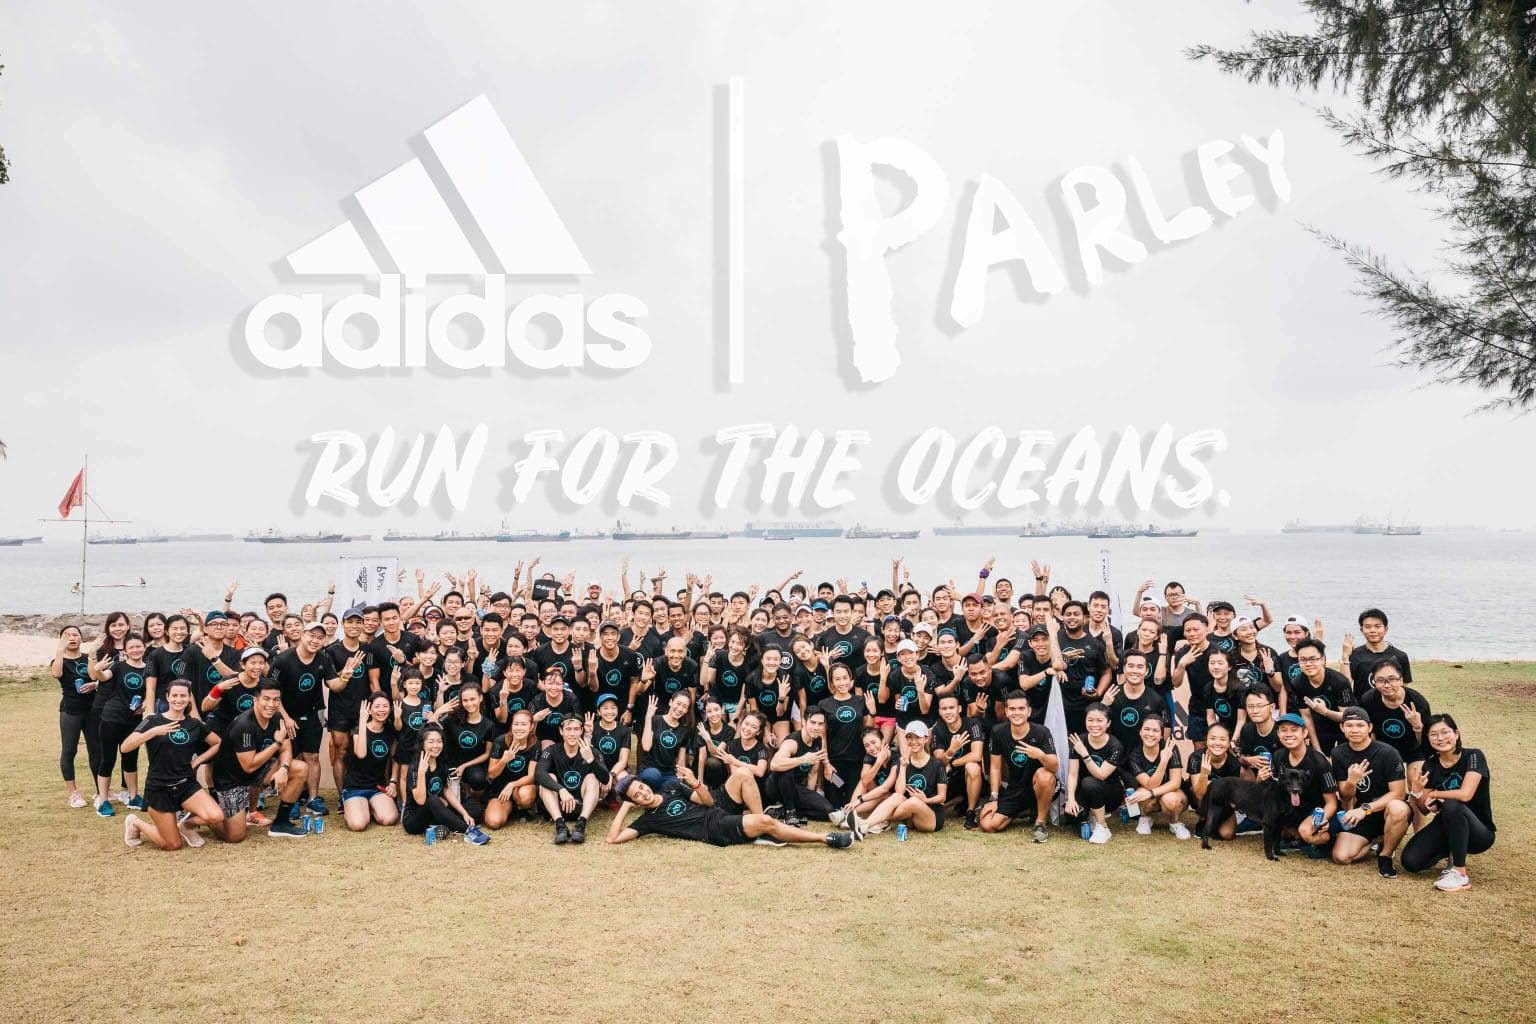 run for the oceans 2018